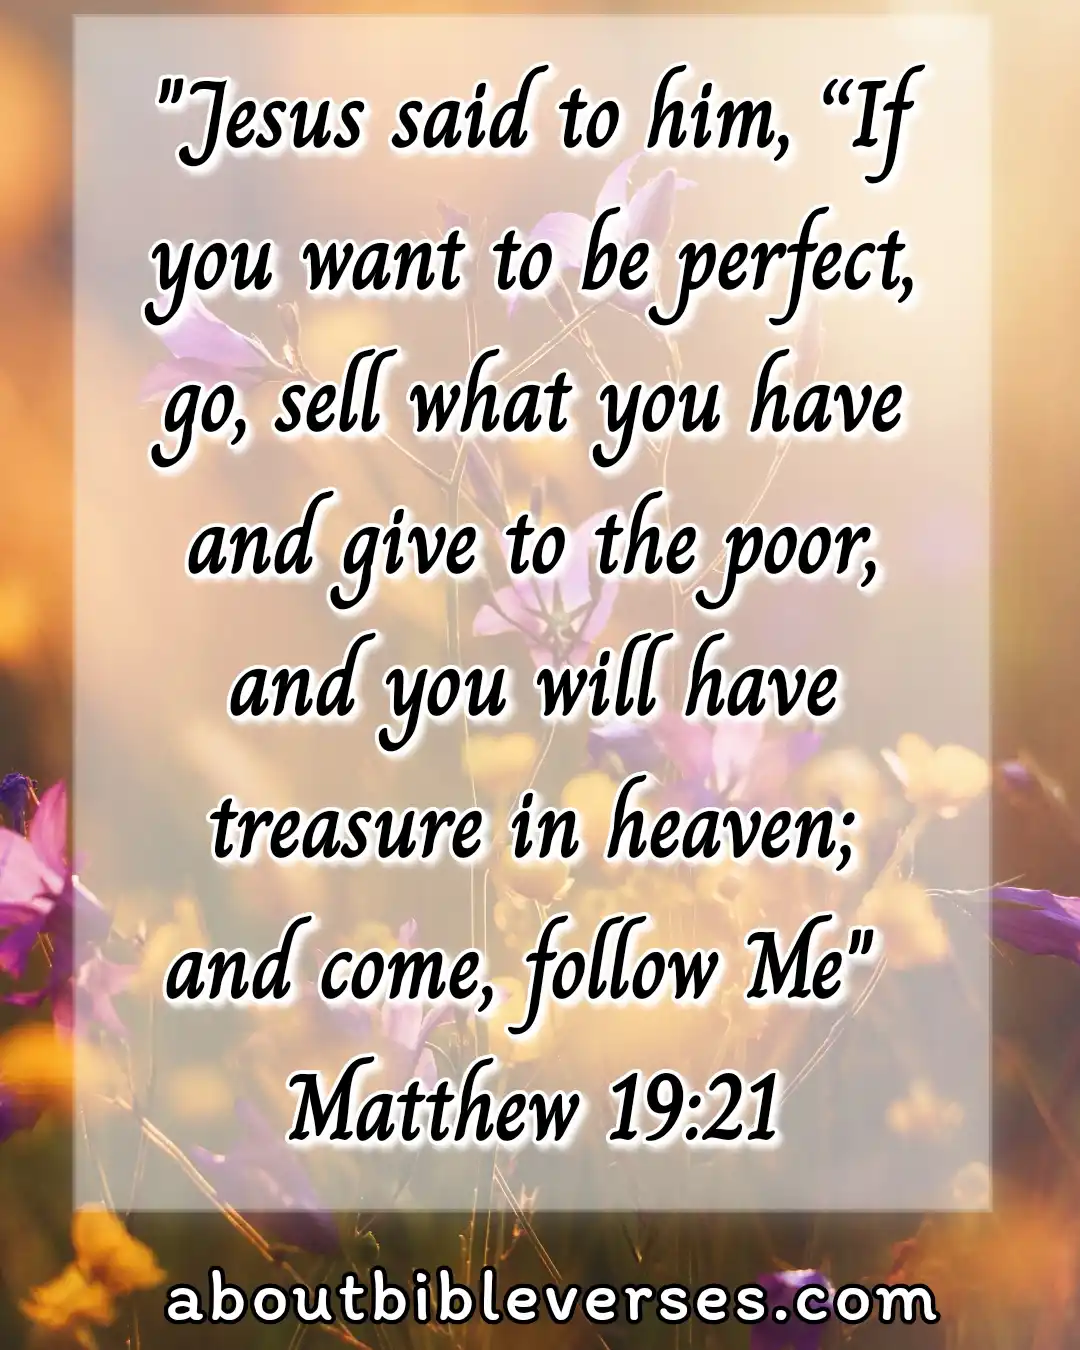 Bible Verses About Treasure In Heaven (Matthew 19:21)